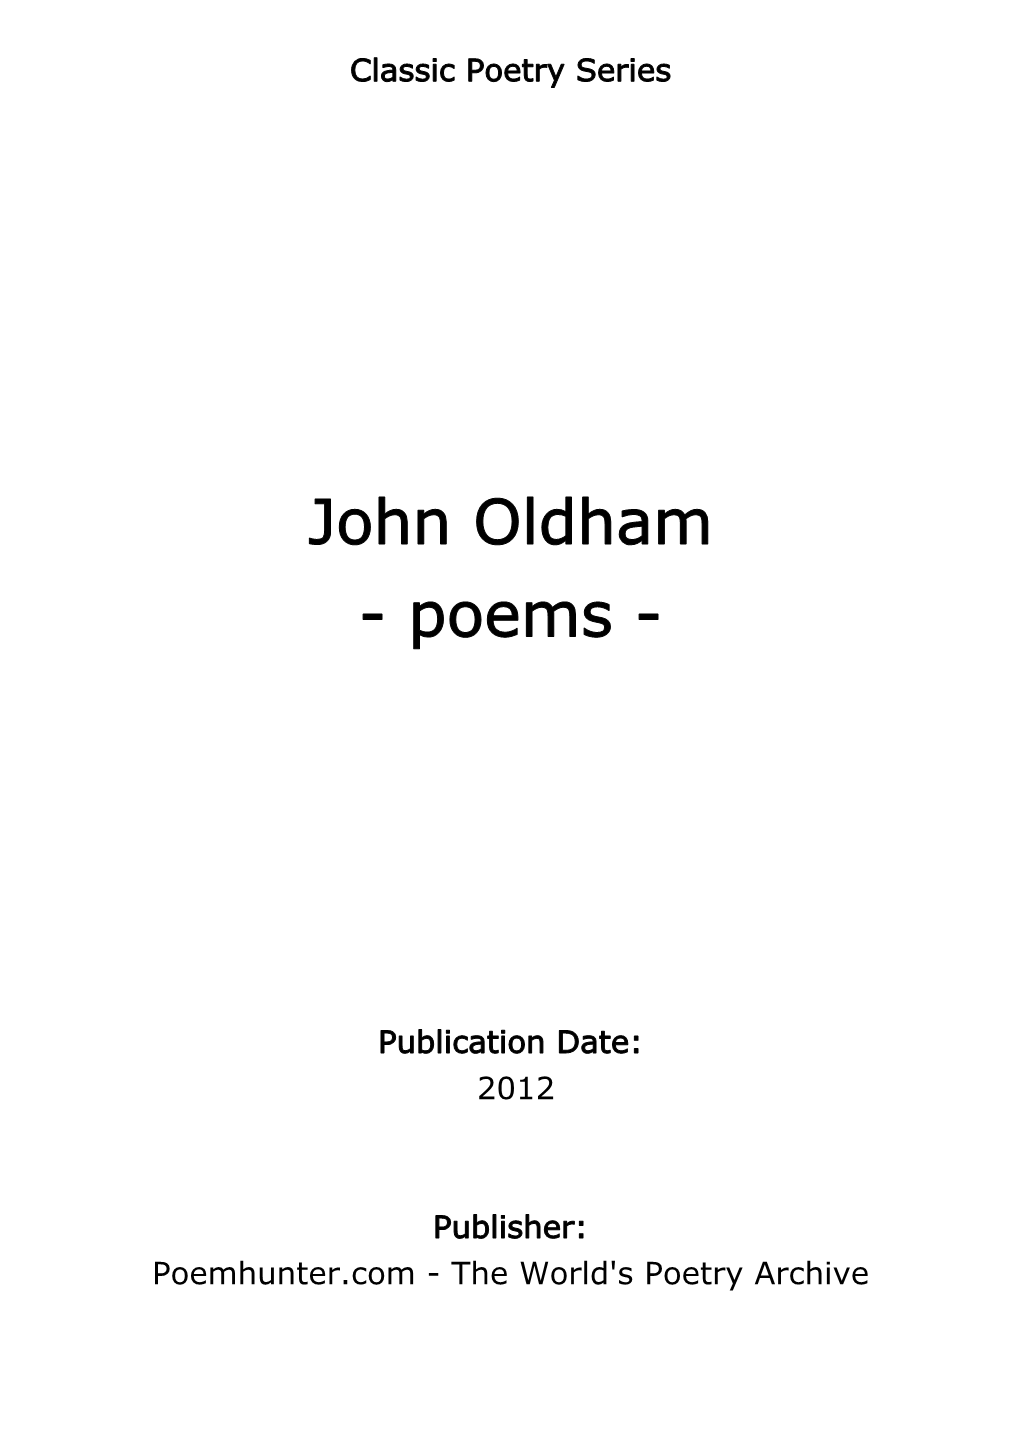 John Oldham - Poems